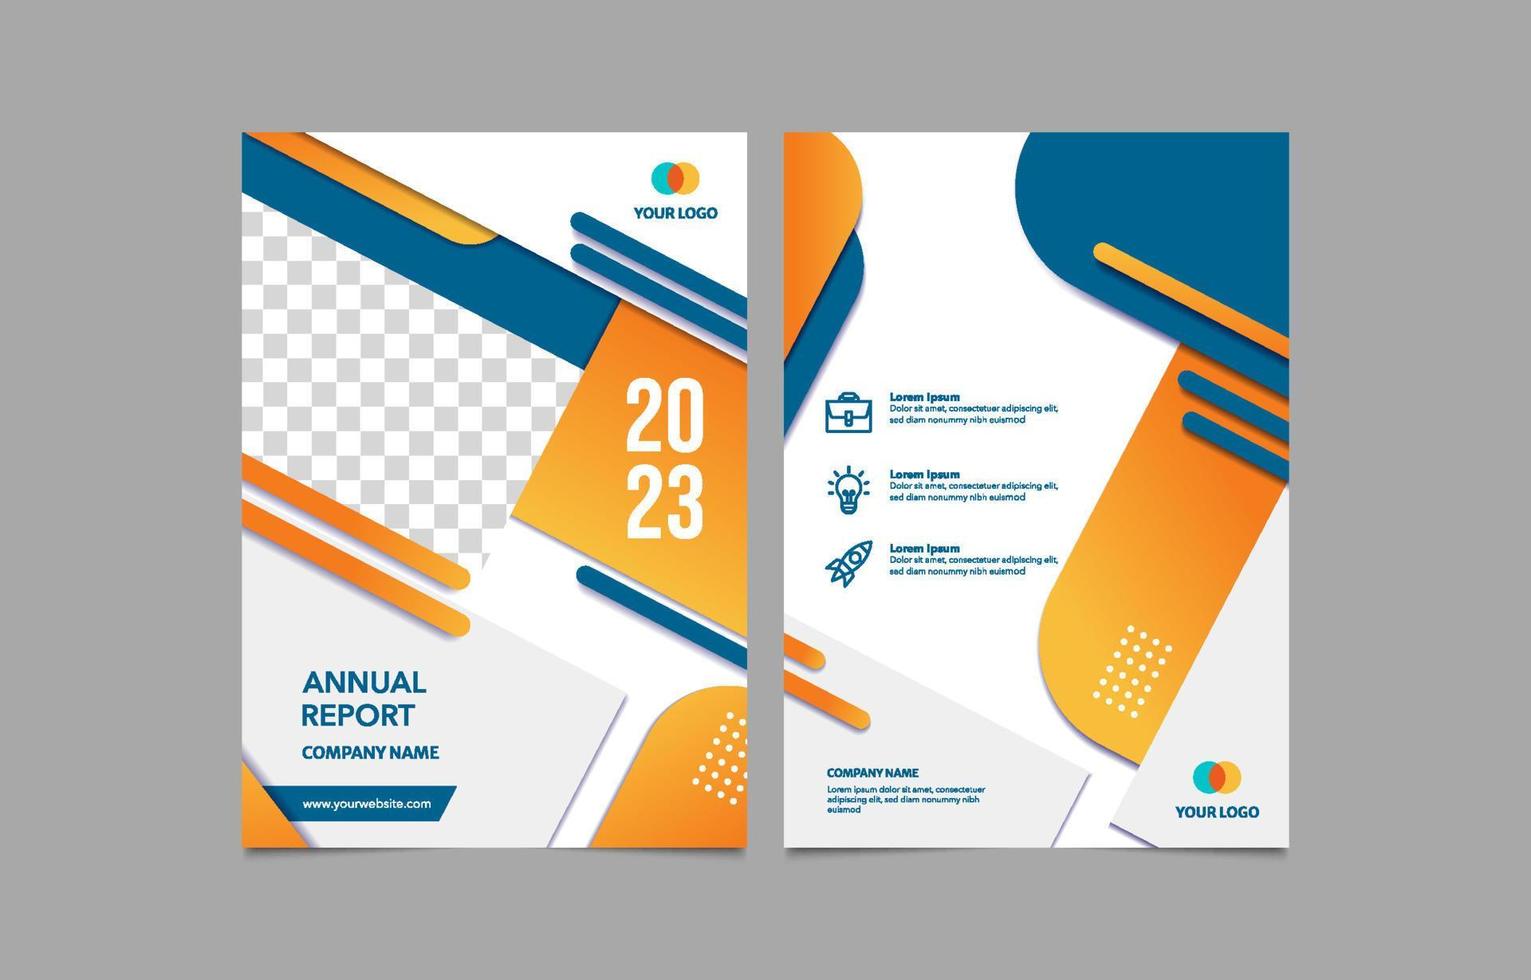 plantilla de informe anual abstracto vector